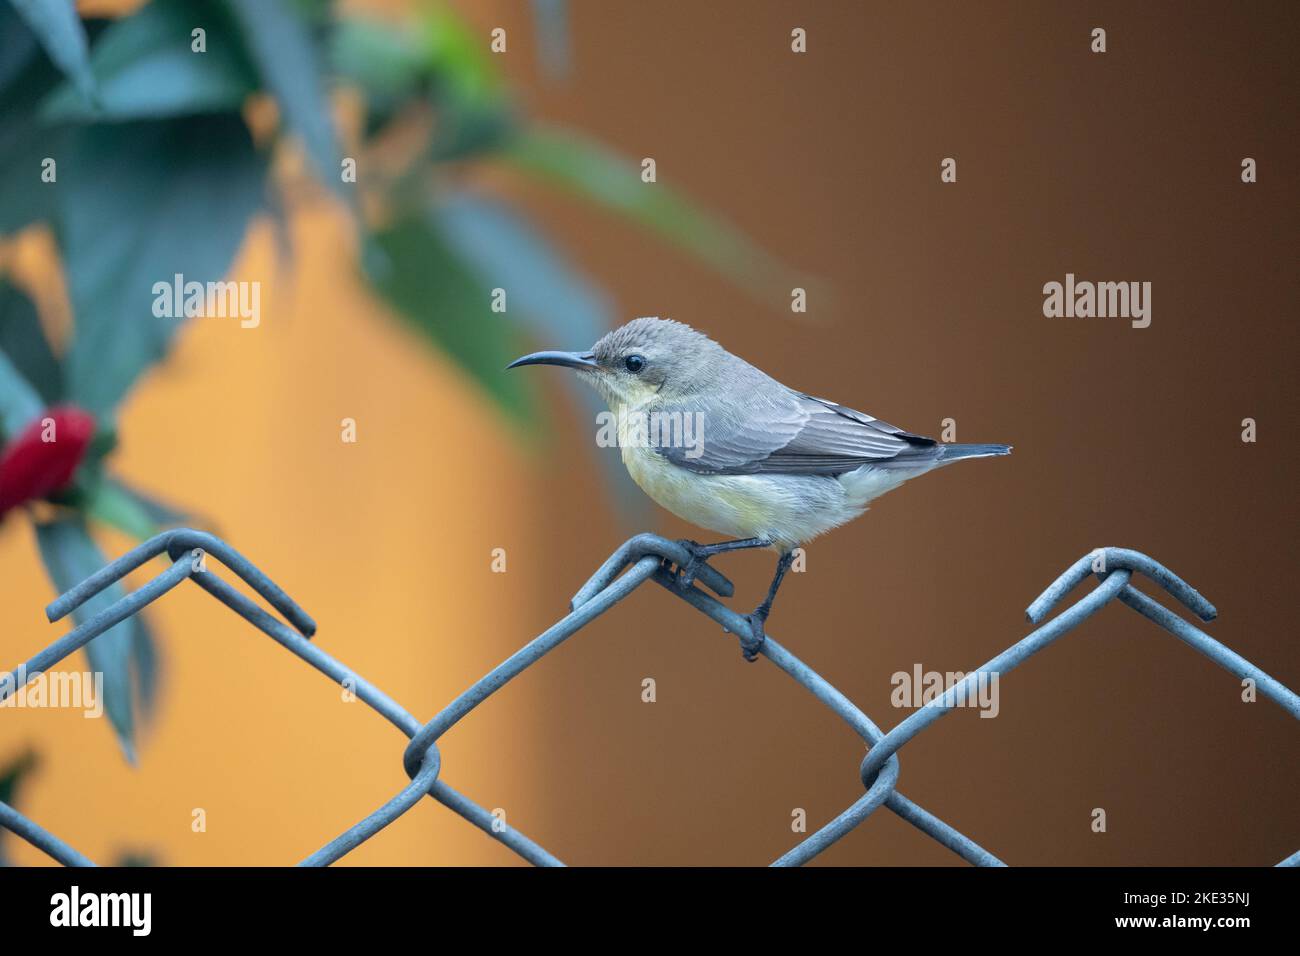 Un Sunbird viola femmina seduto su una recinzione in rete metallica. Foto Stock